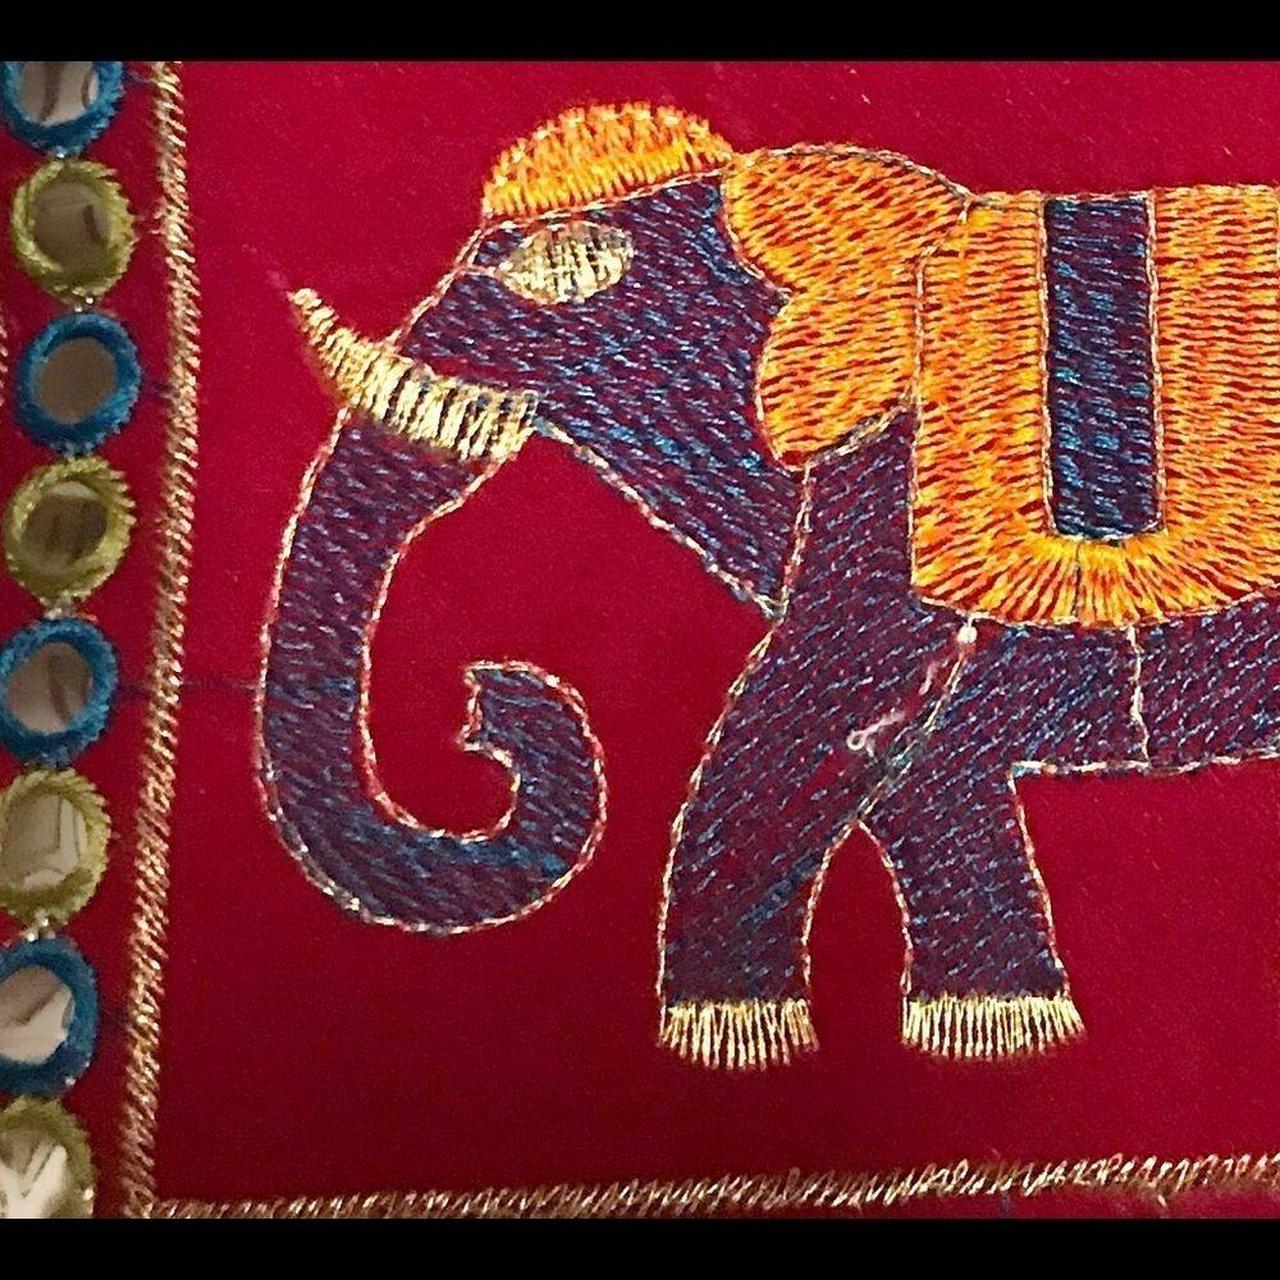 Product Image 4 - Embroidery Boho Elephant Shoulder Bag

Bag